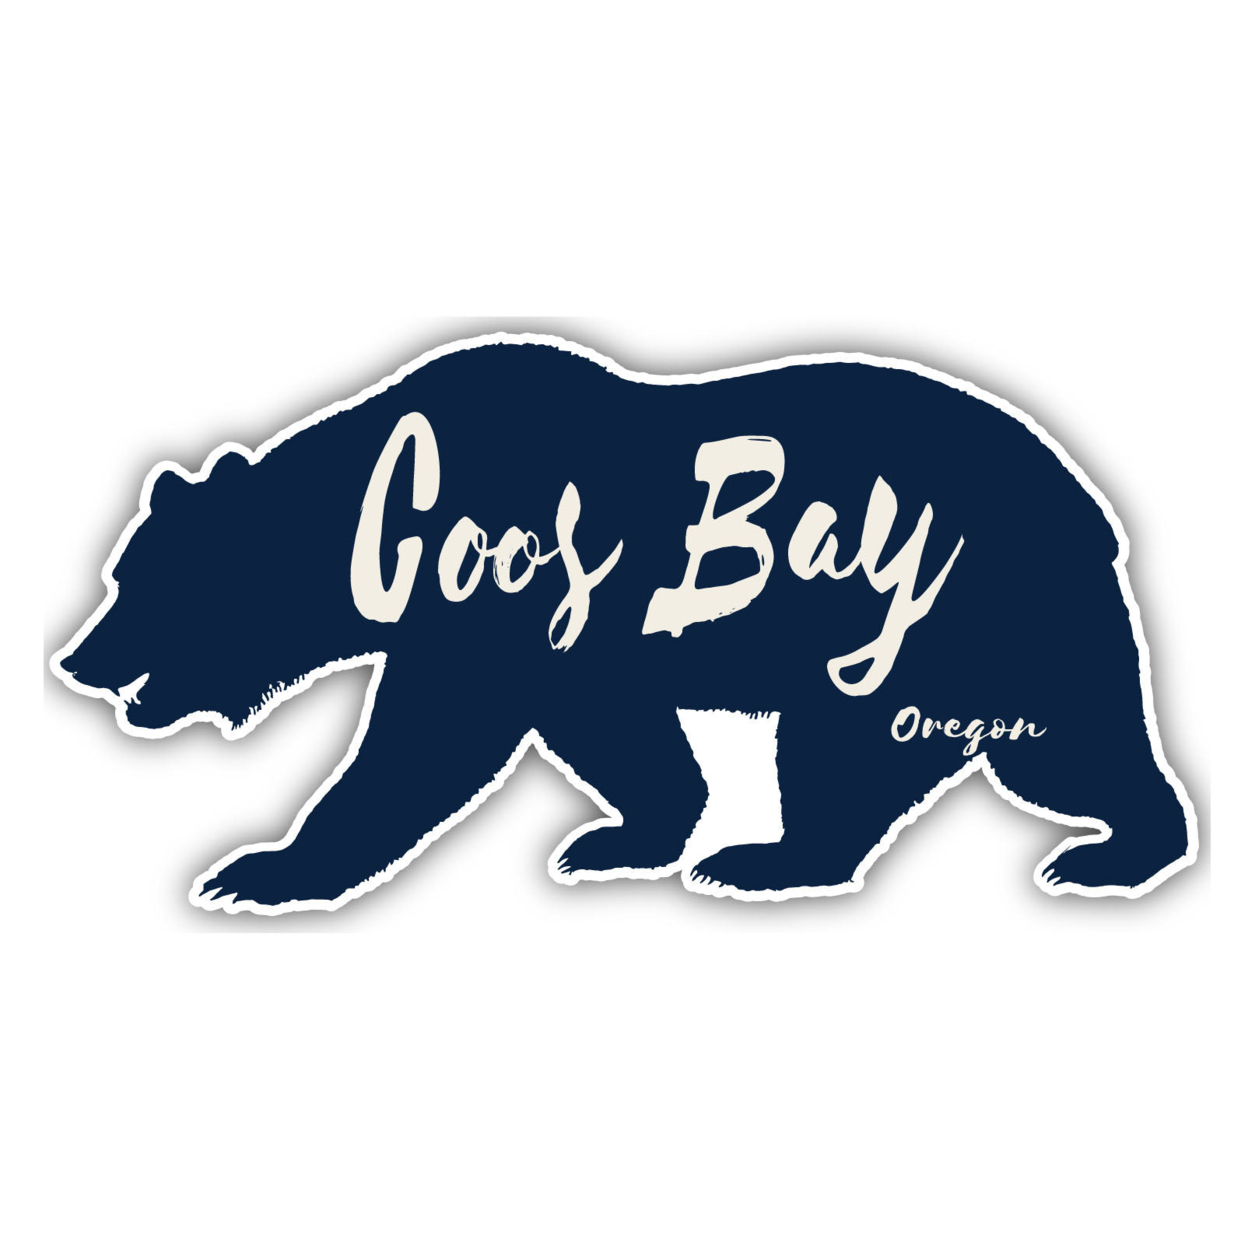 Coos Bay Oregon Souvenir Decorative Stickers (Choose Theme And Size) - Single Unit, 8-Inch, Bear